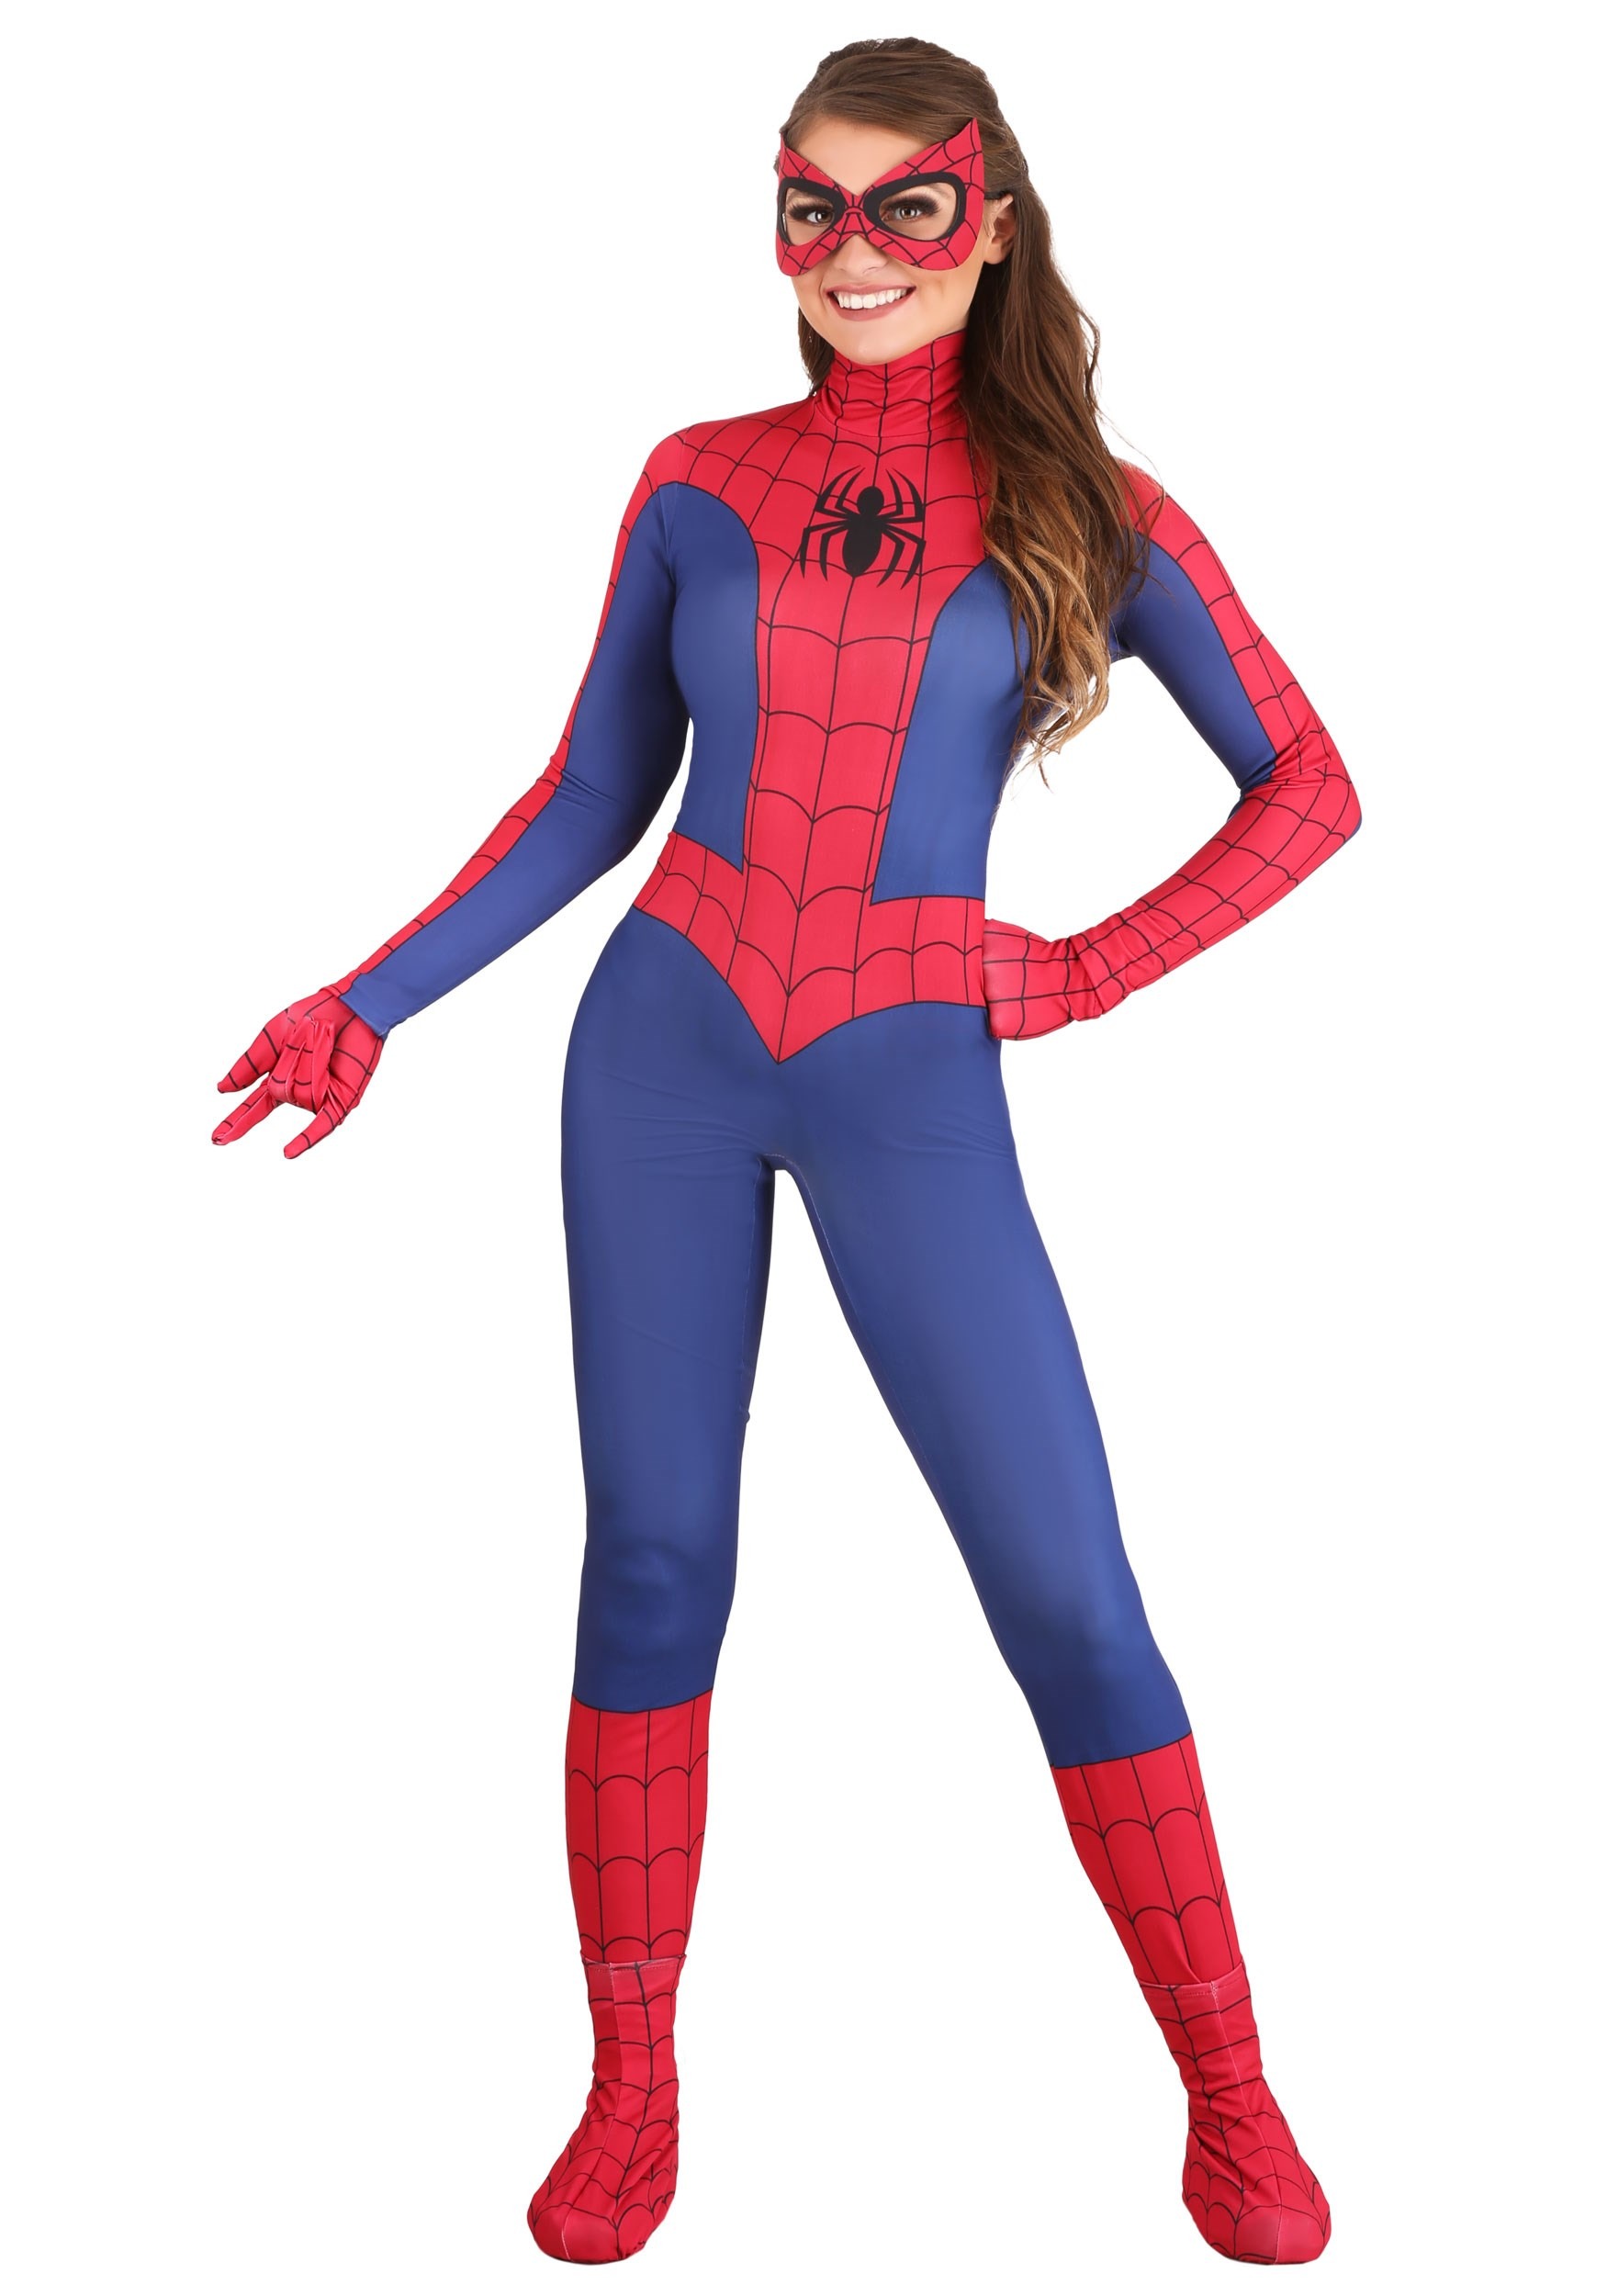 https://images.halloweencostumes.com/products/63242/1-1/spider-man-womens-costume-new-main.jpg